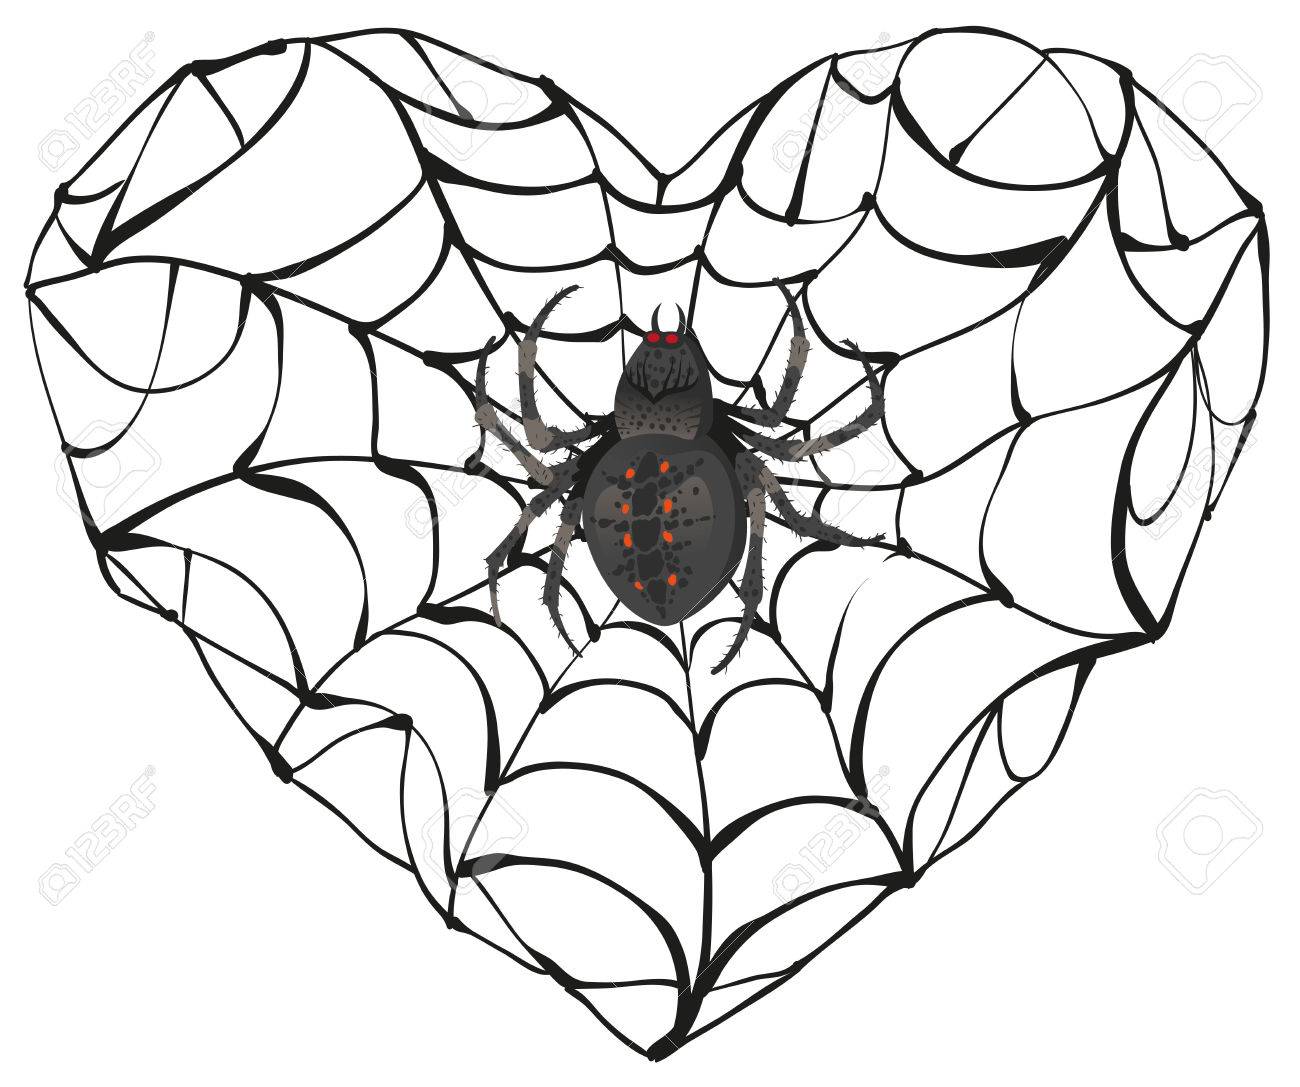 51375935-spider-wove-web-of-heart-shape-heart-symbol-of-love-gothic-love-heart-isolated-on-white-illustration.jpg